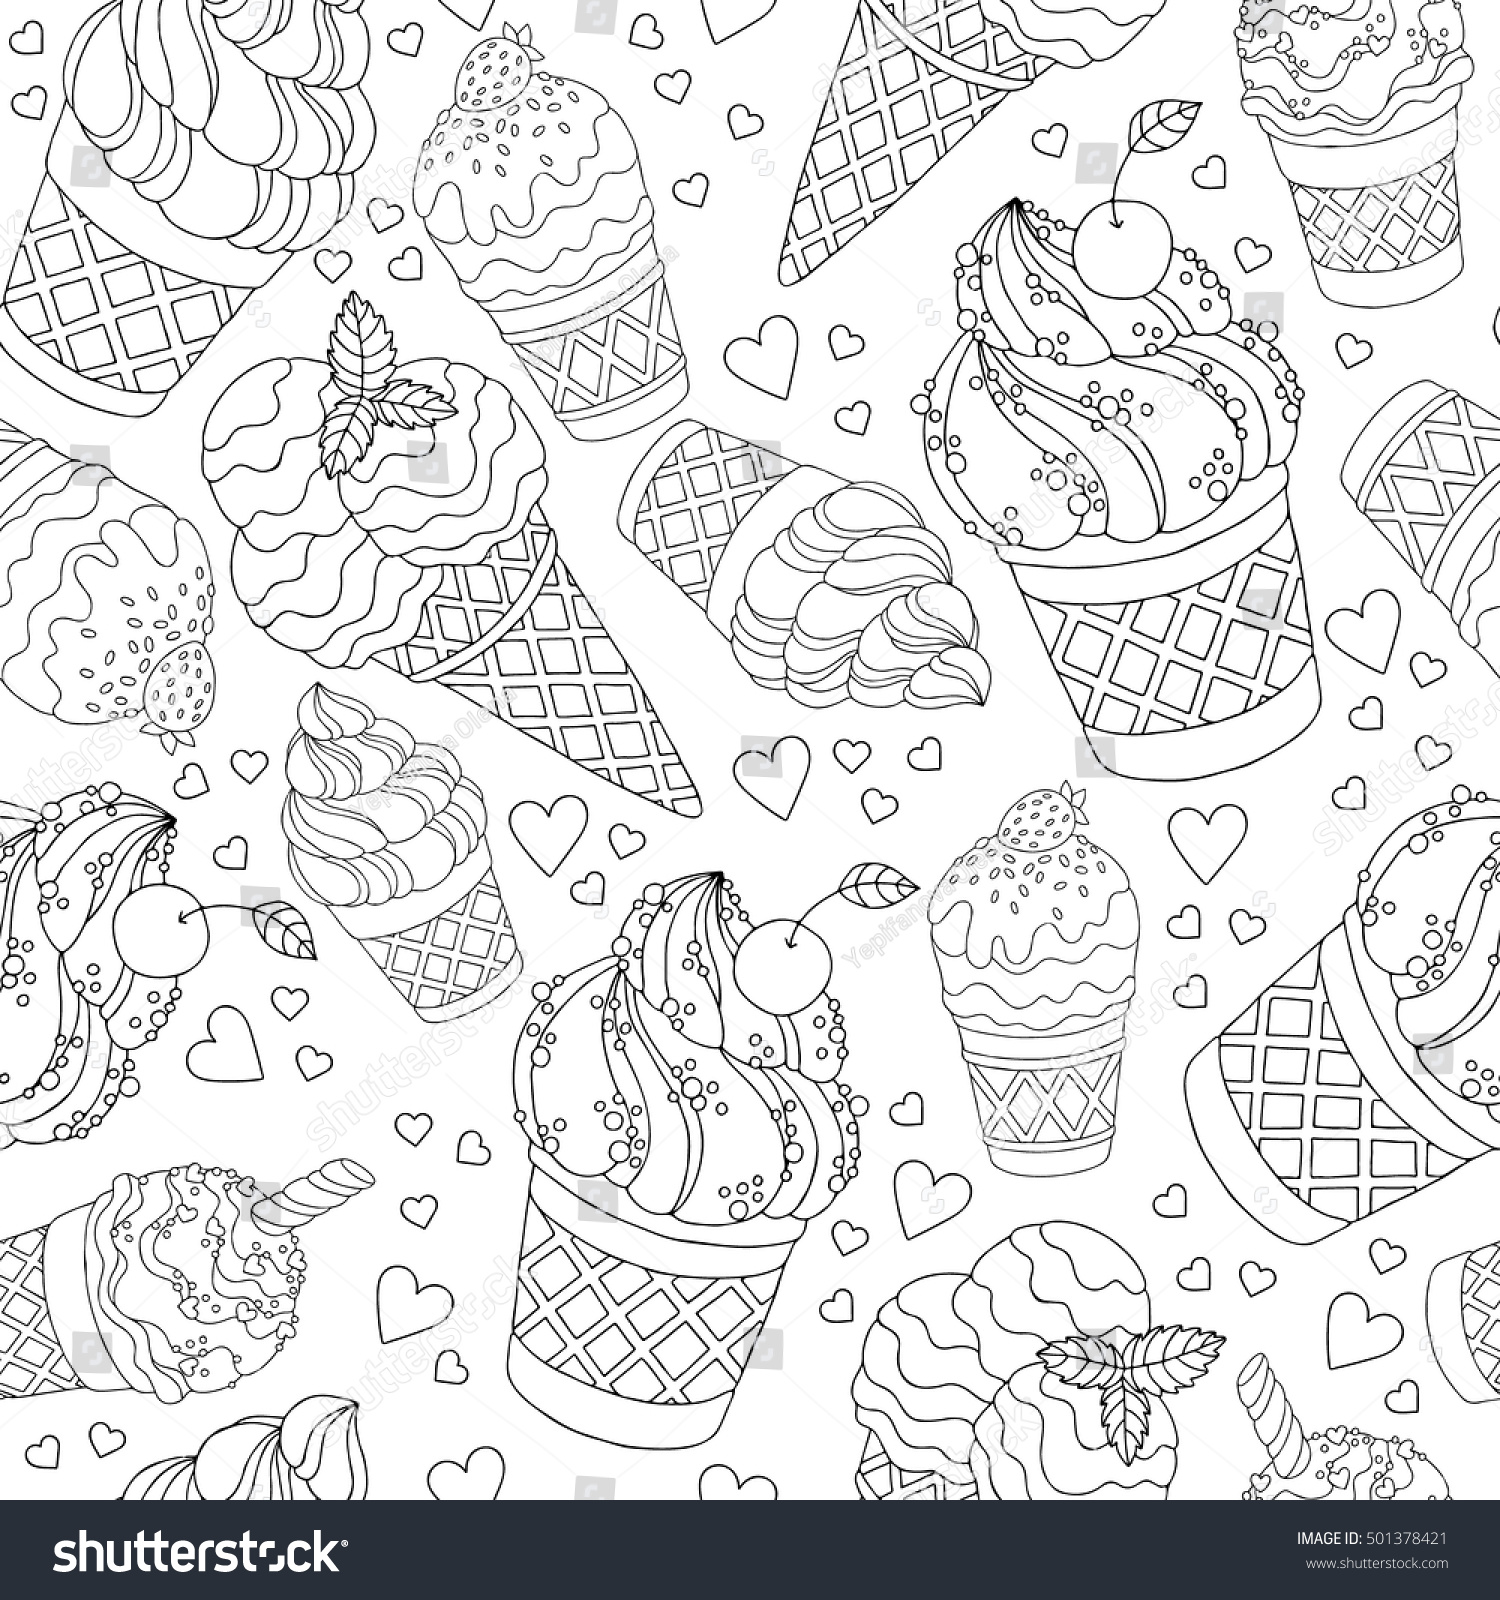 Vector Hand Drawn Cartoon Ice Cream Stock Vector (Royalty Free ...